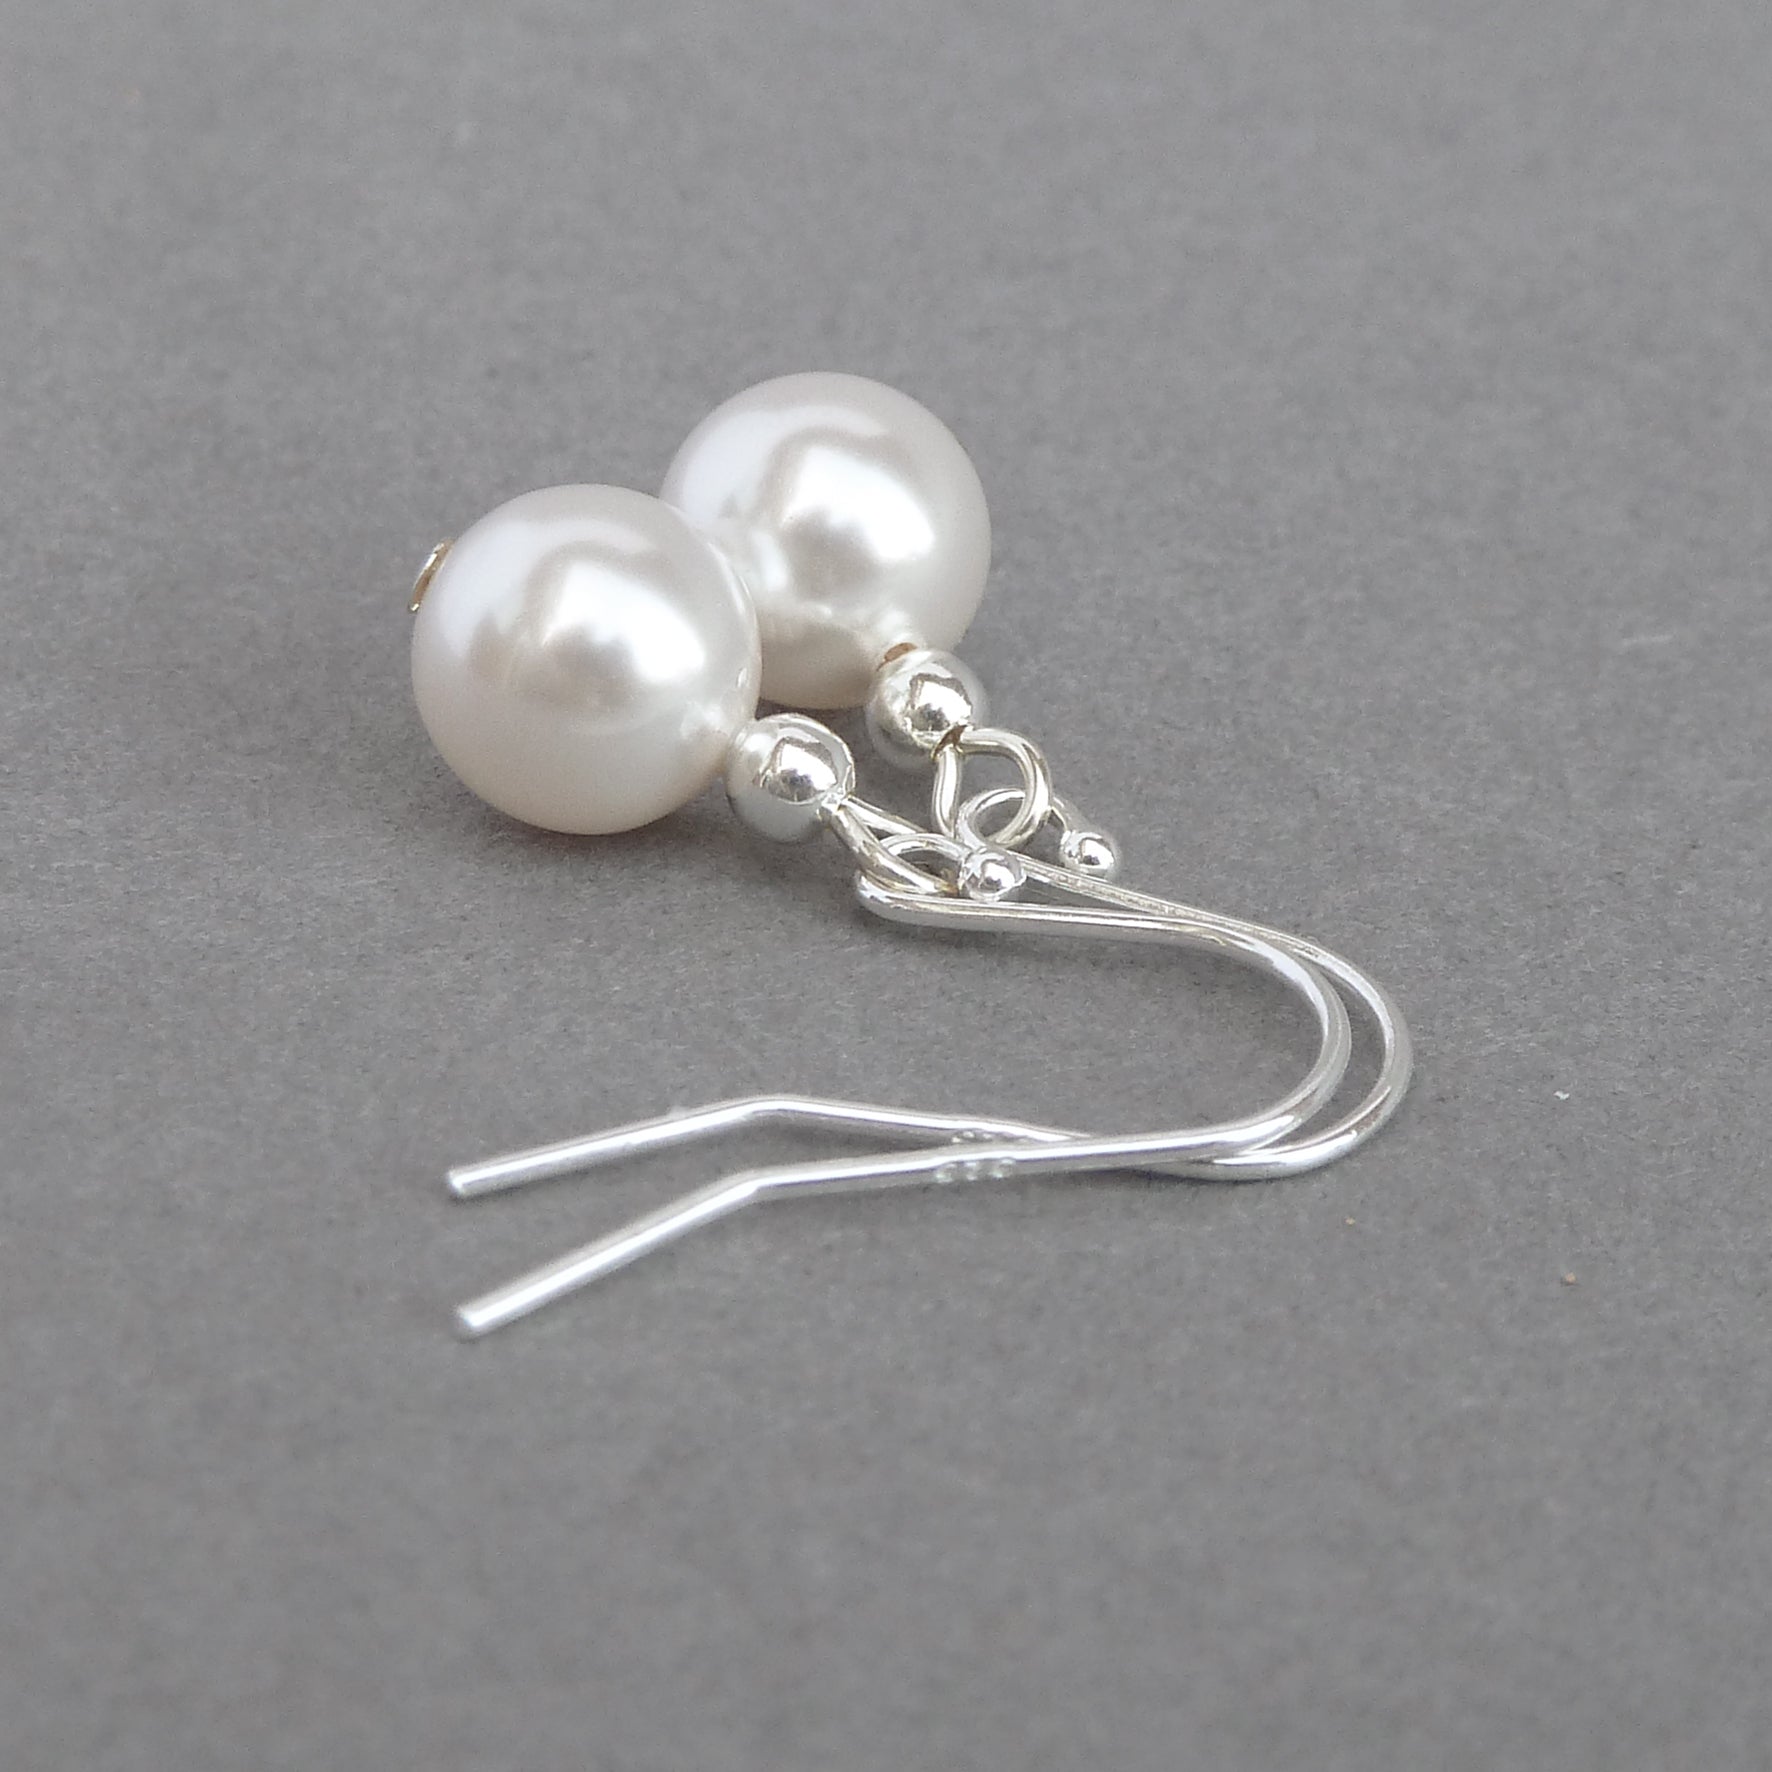 White pearl wedding earrings